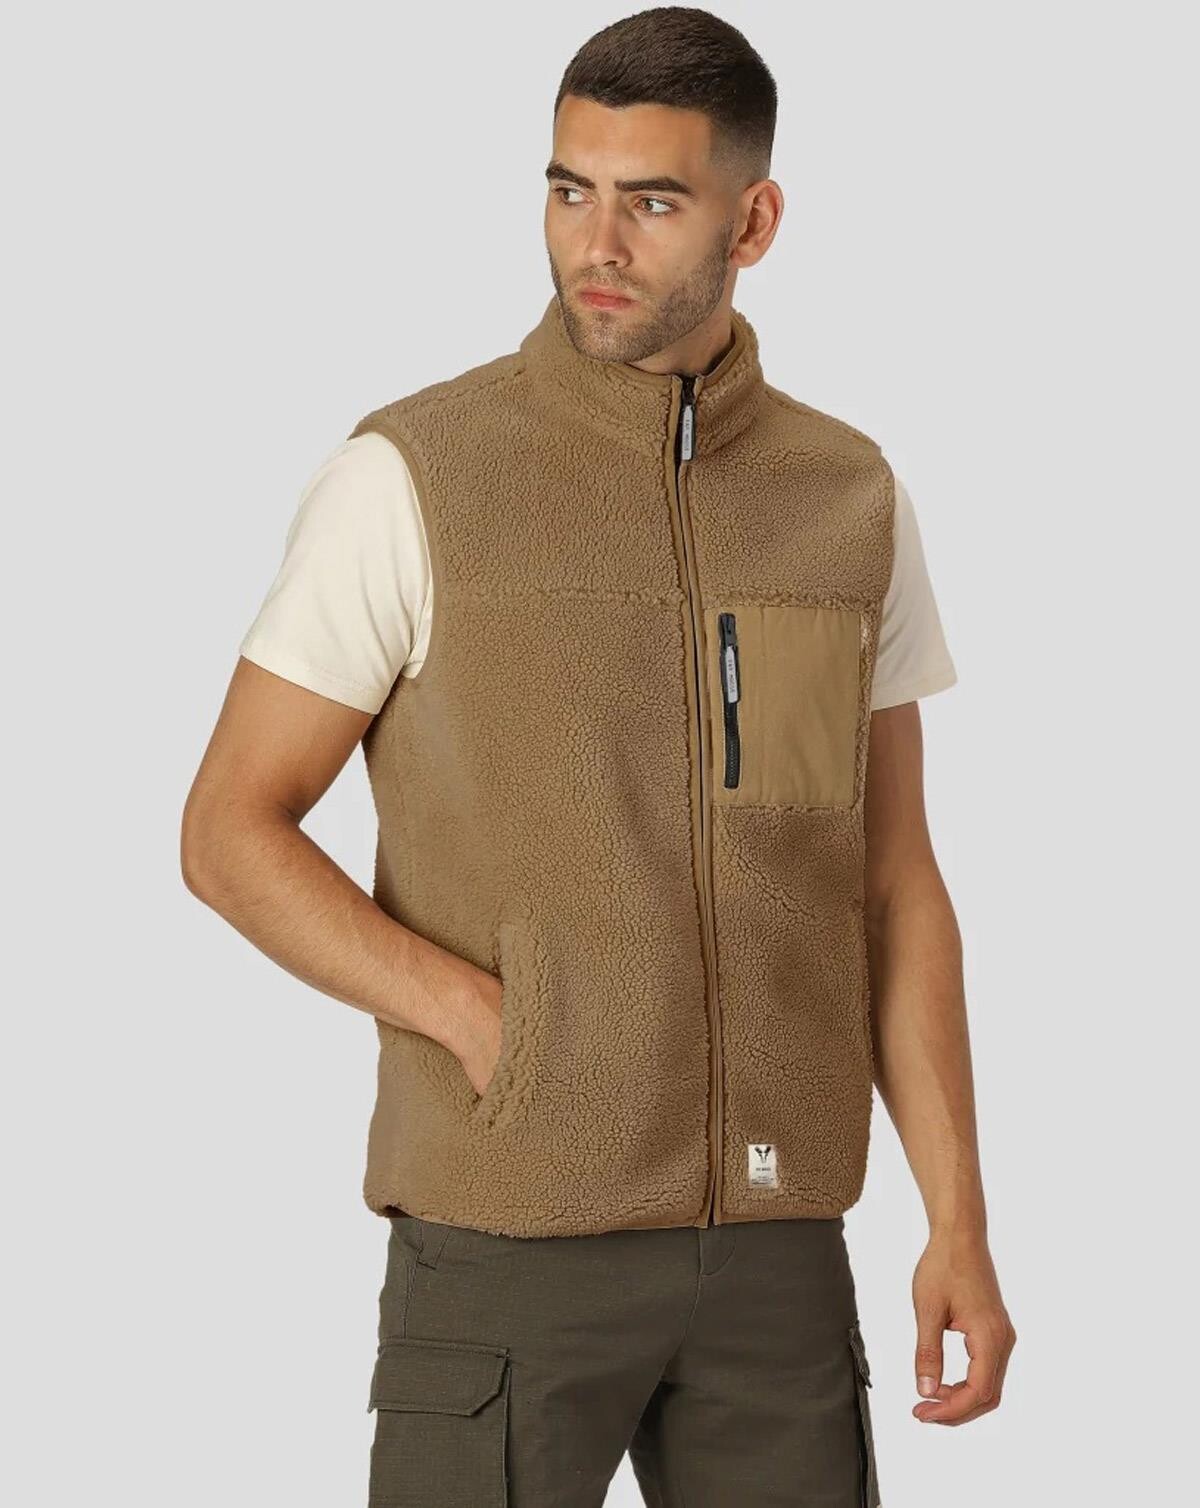 Fat Moose Hugh Fleece Vest (Light Brown, XL)